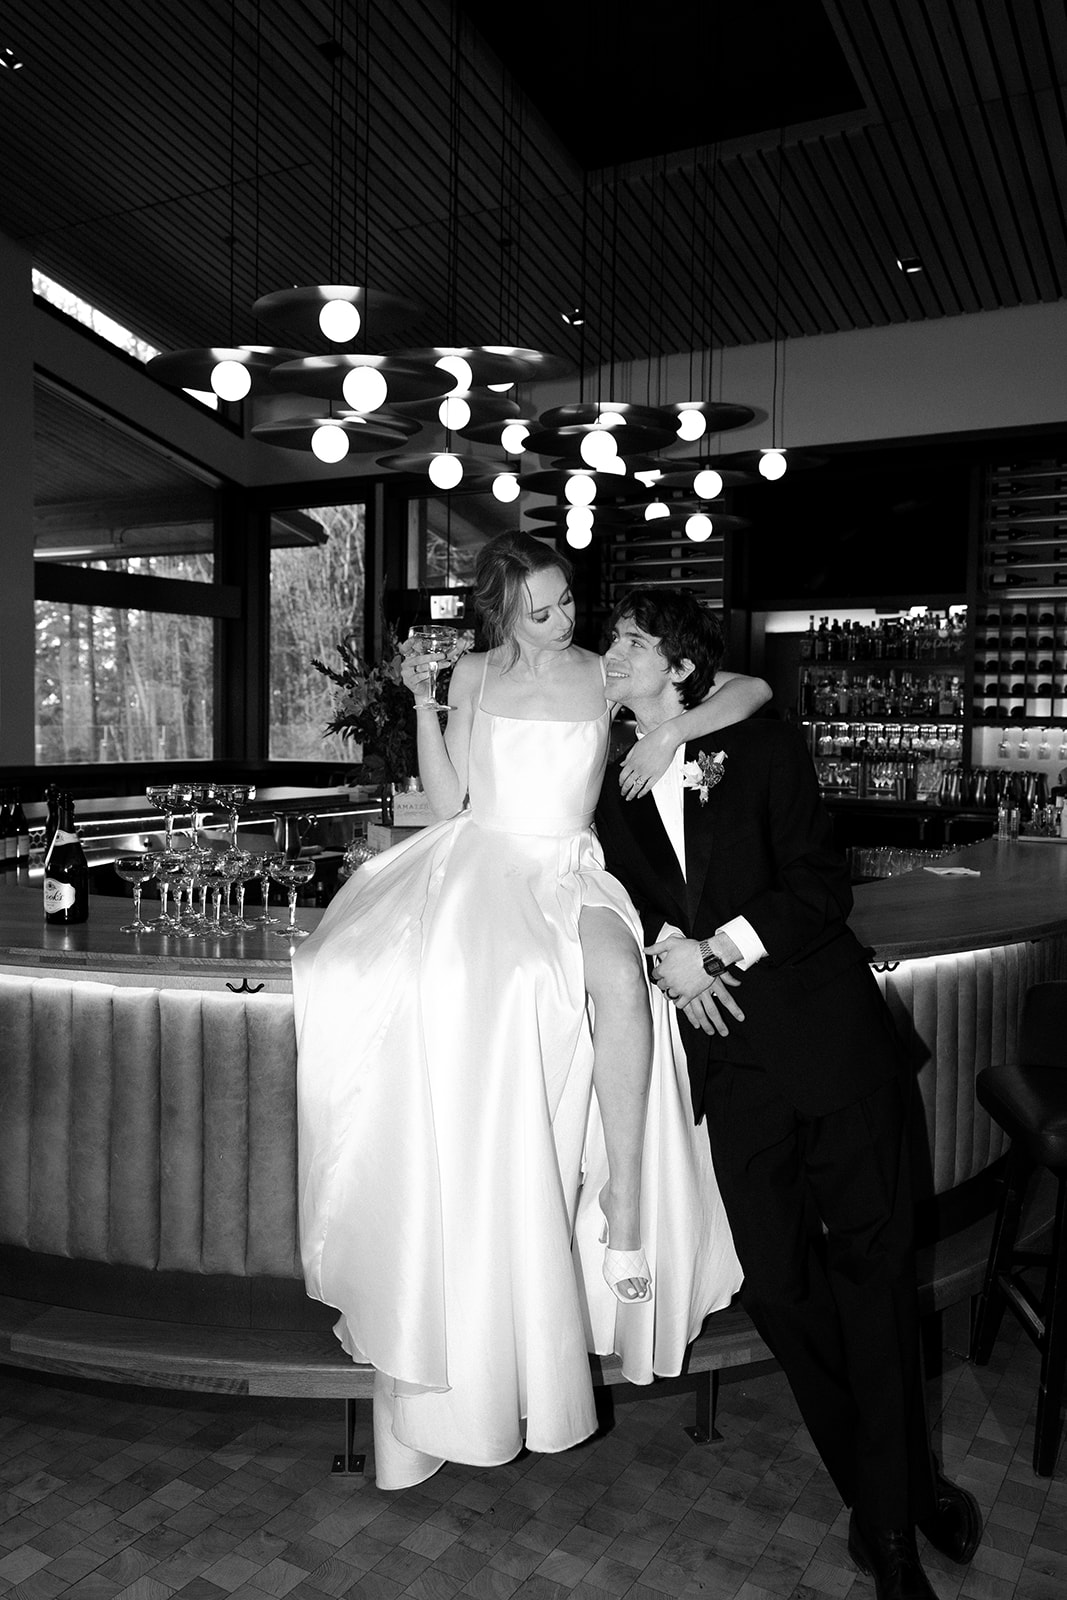 editorial wedding bar portraits with flash photography